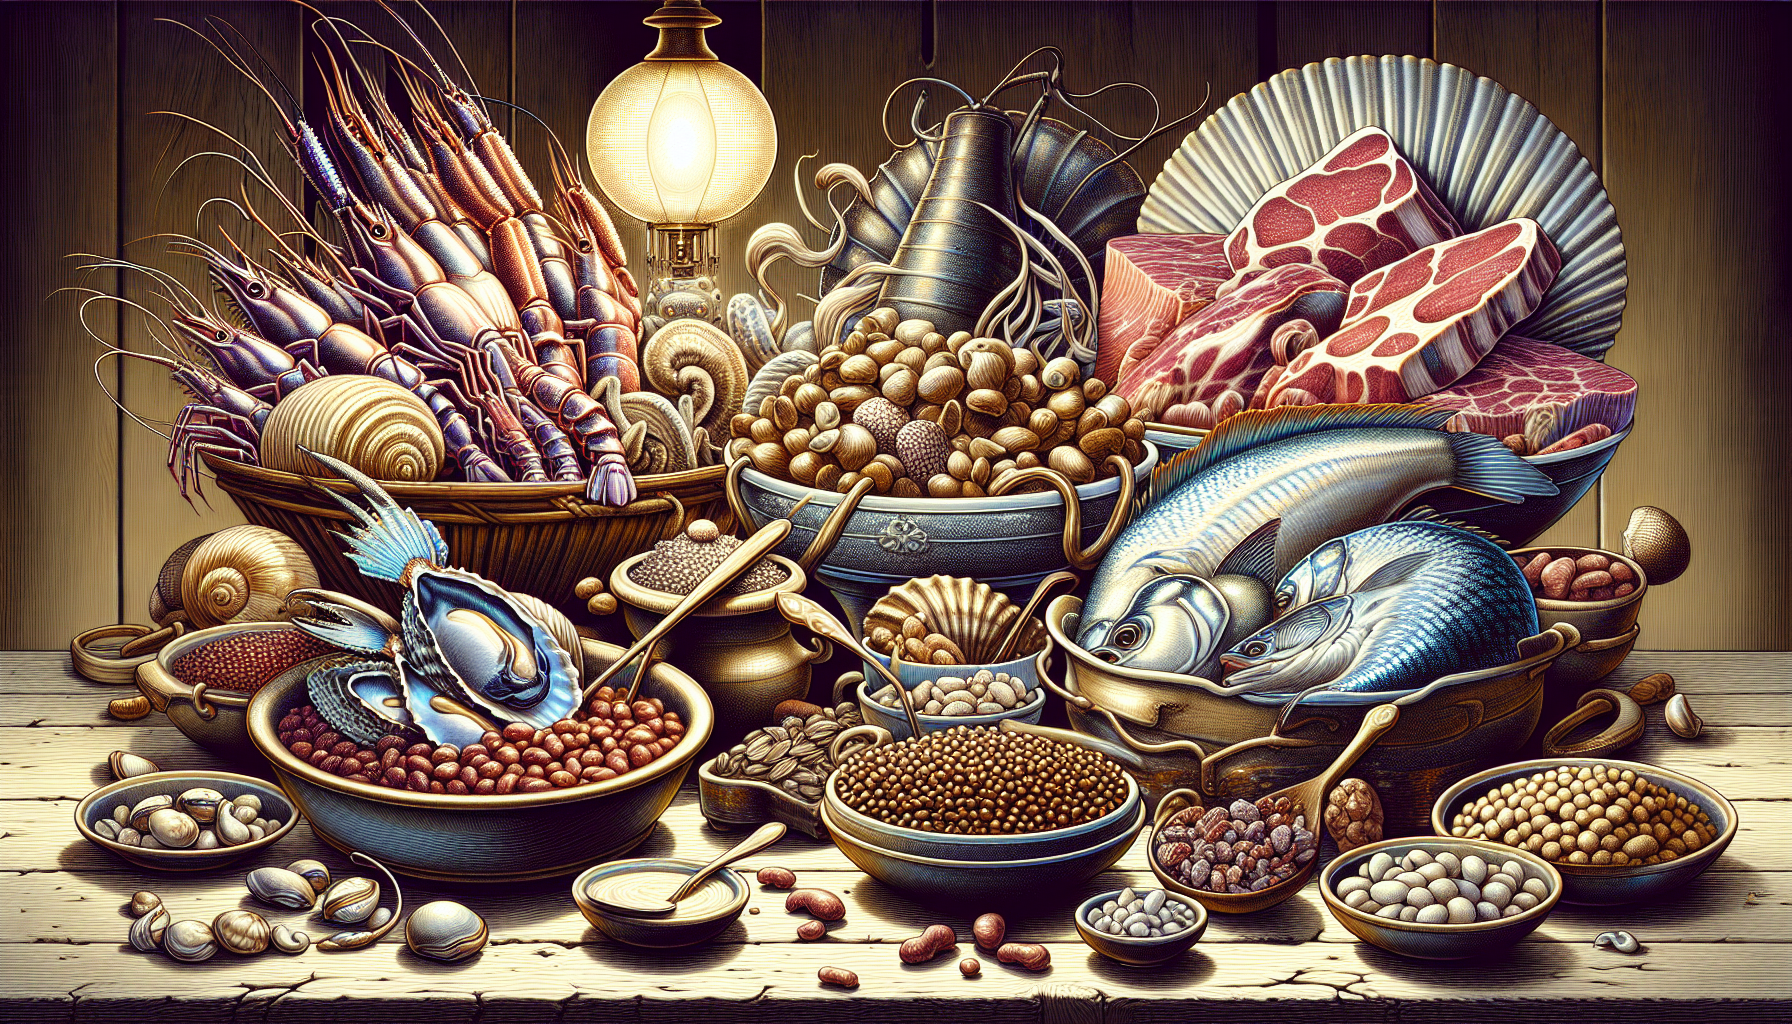 Illustration of zinc-rich foods like shellfish, legumes, and meats